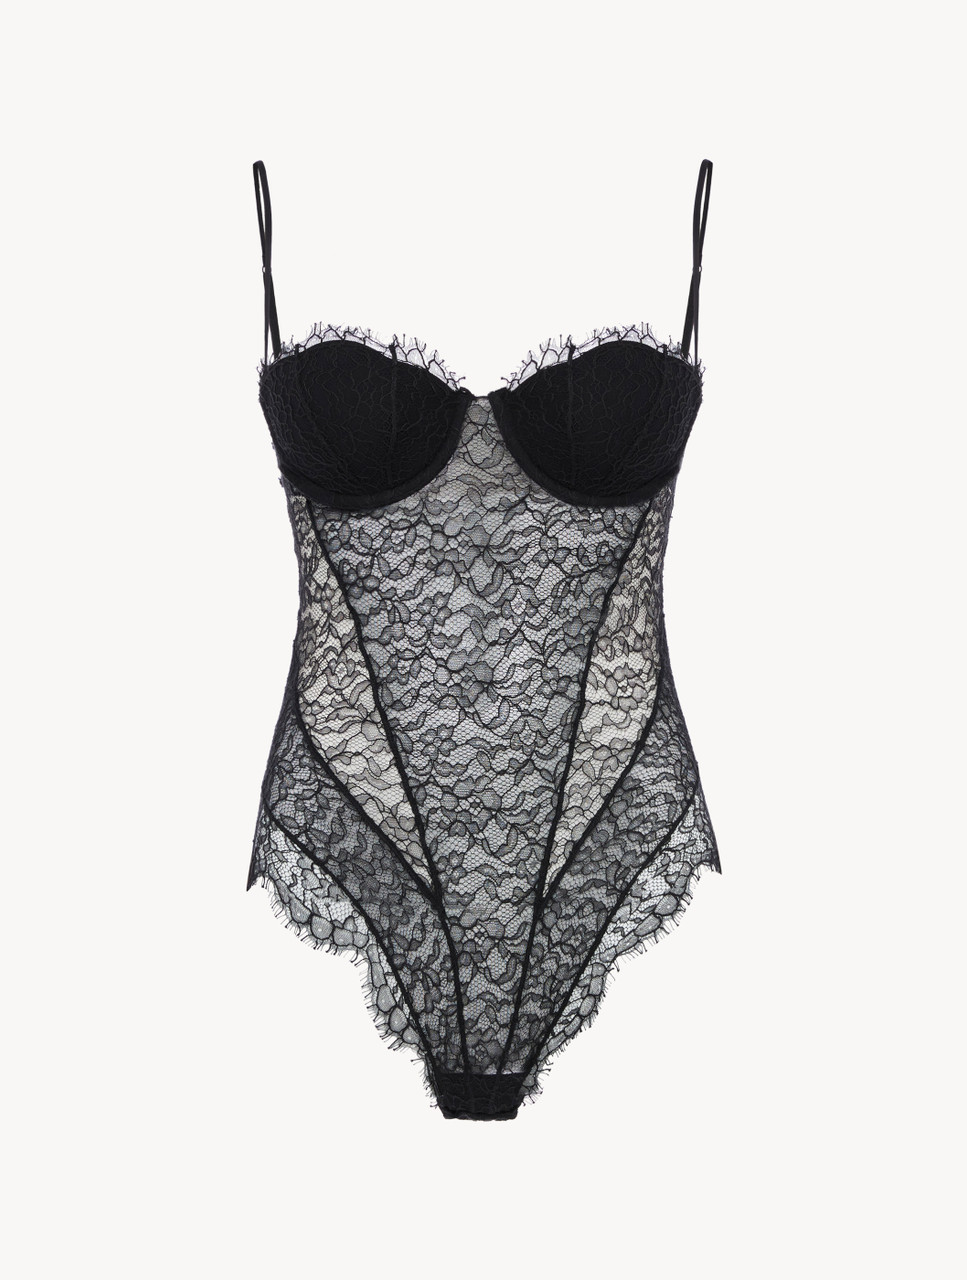  La Perla, Brigitta Lace Bodysuit, 32B, Black : Luxury